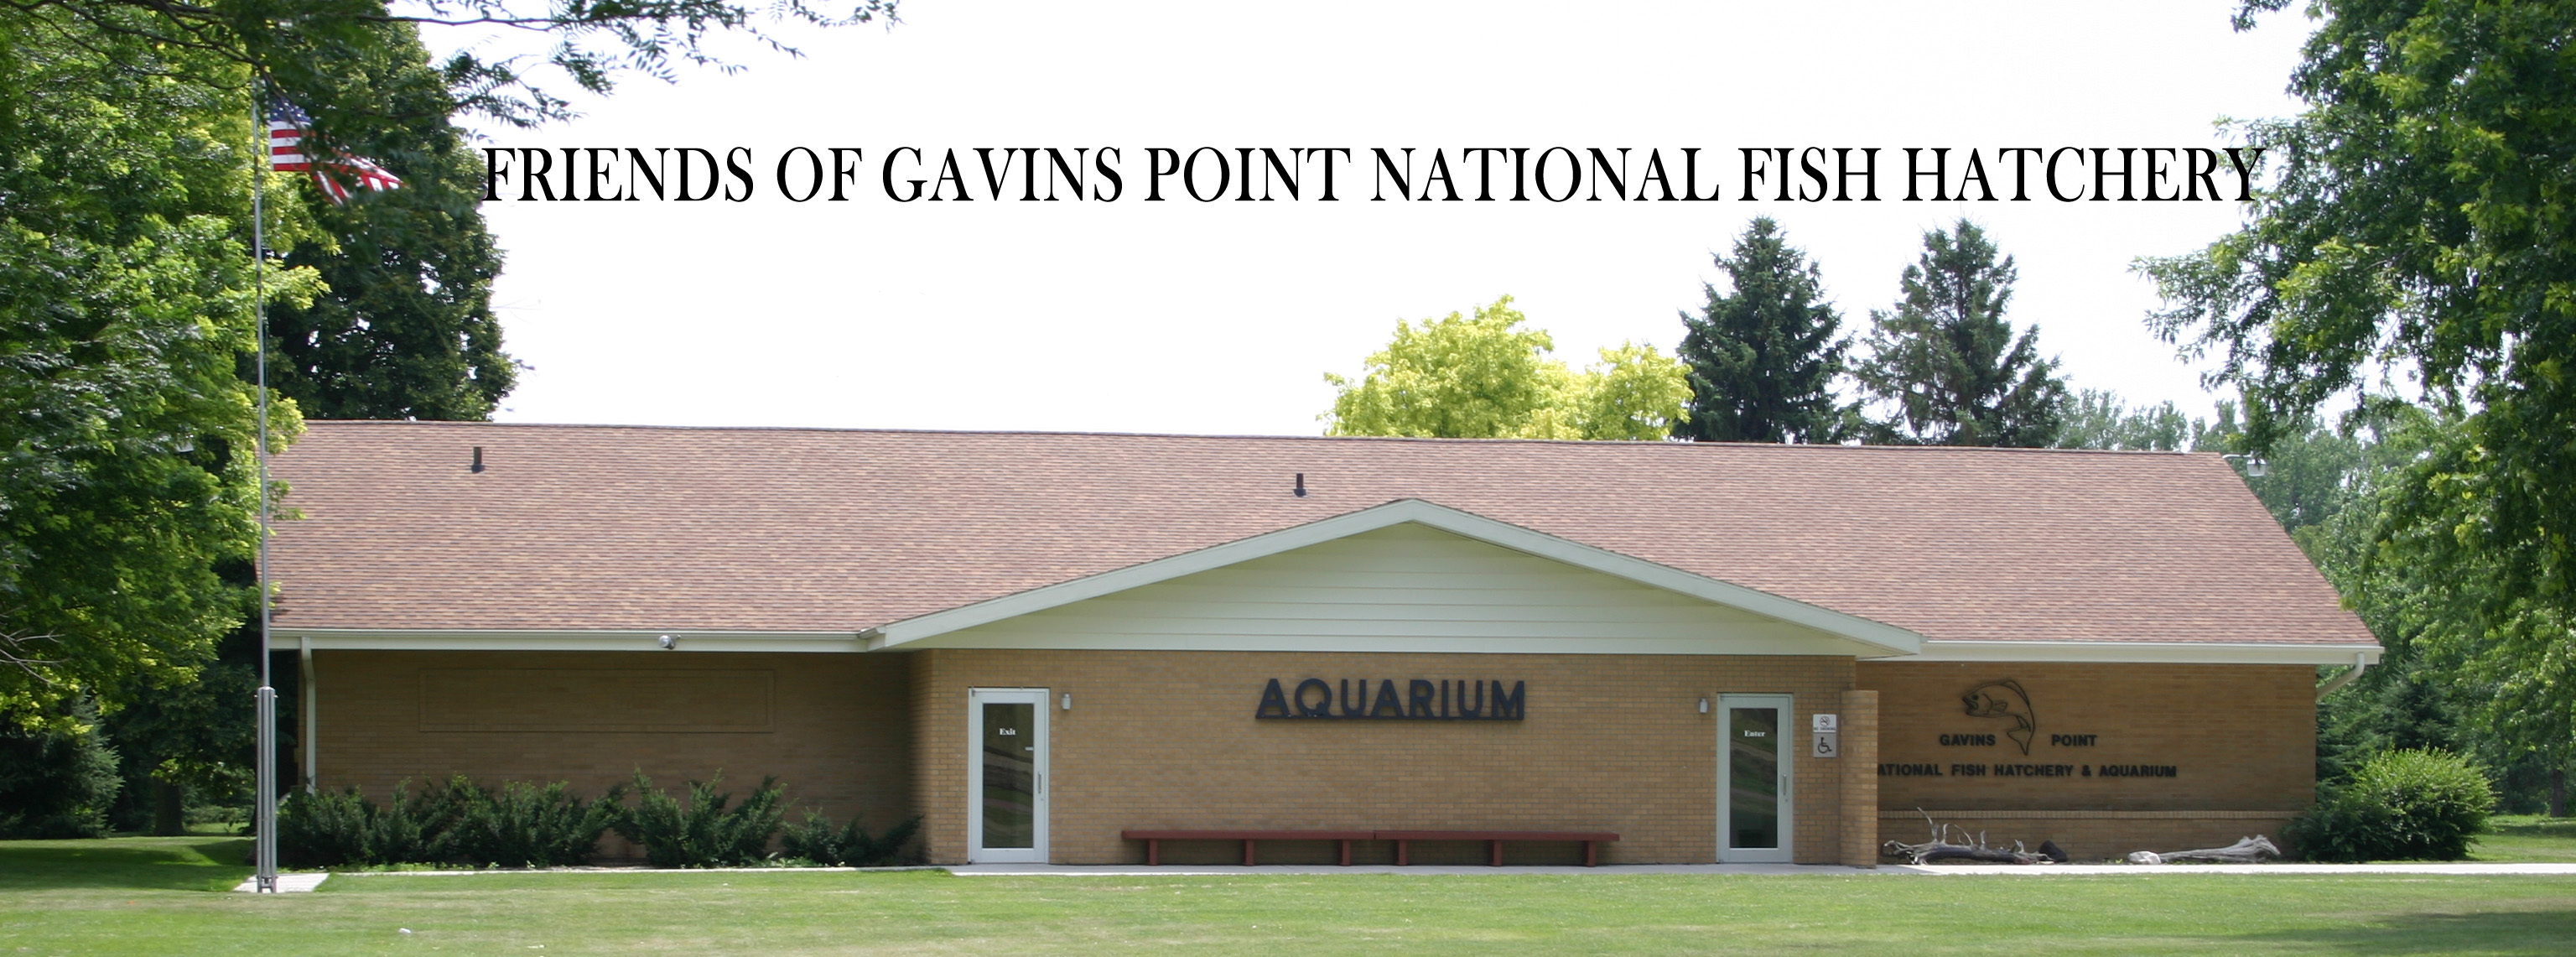 Friends of Gavin's Point National Fish Hatchery